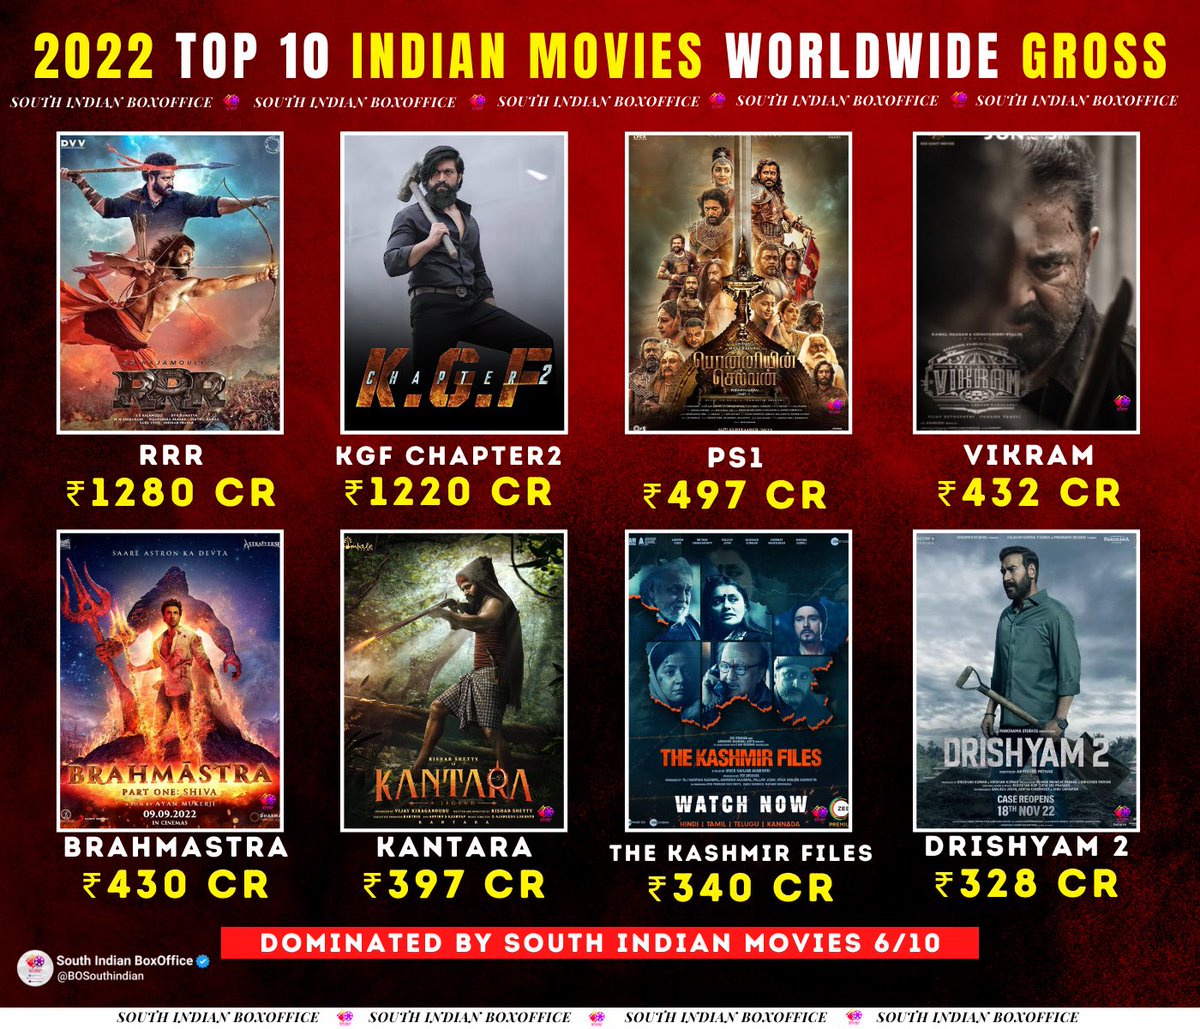 2022 Top 10 Indian Movies Worldwide Gross

1 #RRR: ₹1280 Cr
2 #KGFChapter2 : ₹1220 Cr
3 #PonniyinSelvan1: ₹497 Cr
4 #Vikram: ₹432 Cr
5 #Brahmastra: ₹430 Cr
6 #Kantara: ₹397 Cr
7 #TheKashmirFiles: ₹340 Cr
8 #Drishyam2: ₹328 Cr
9 #BhoolBhulaiyaa2: ₹267 Cr
10 #Beast: ₹230